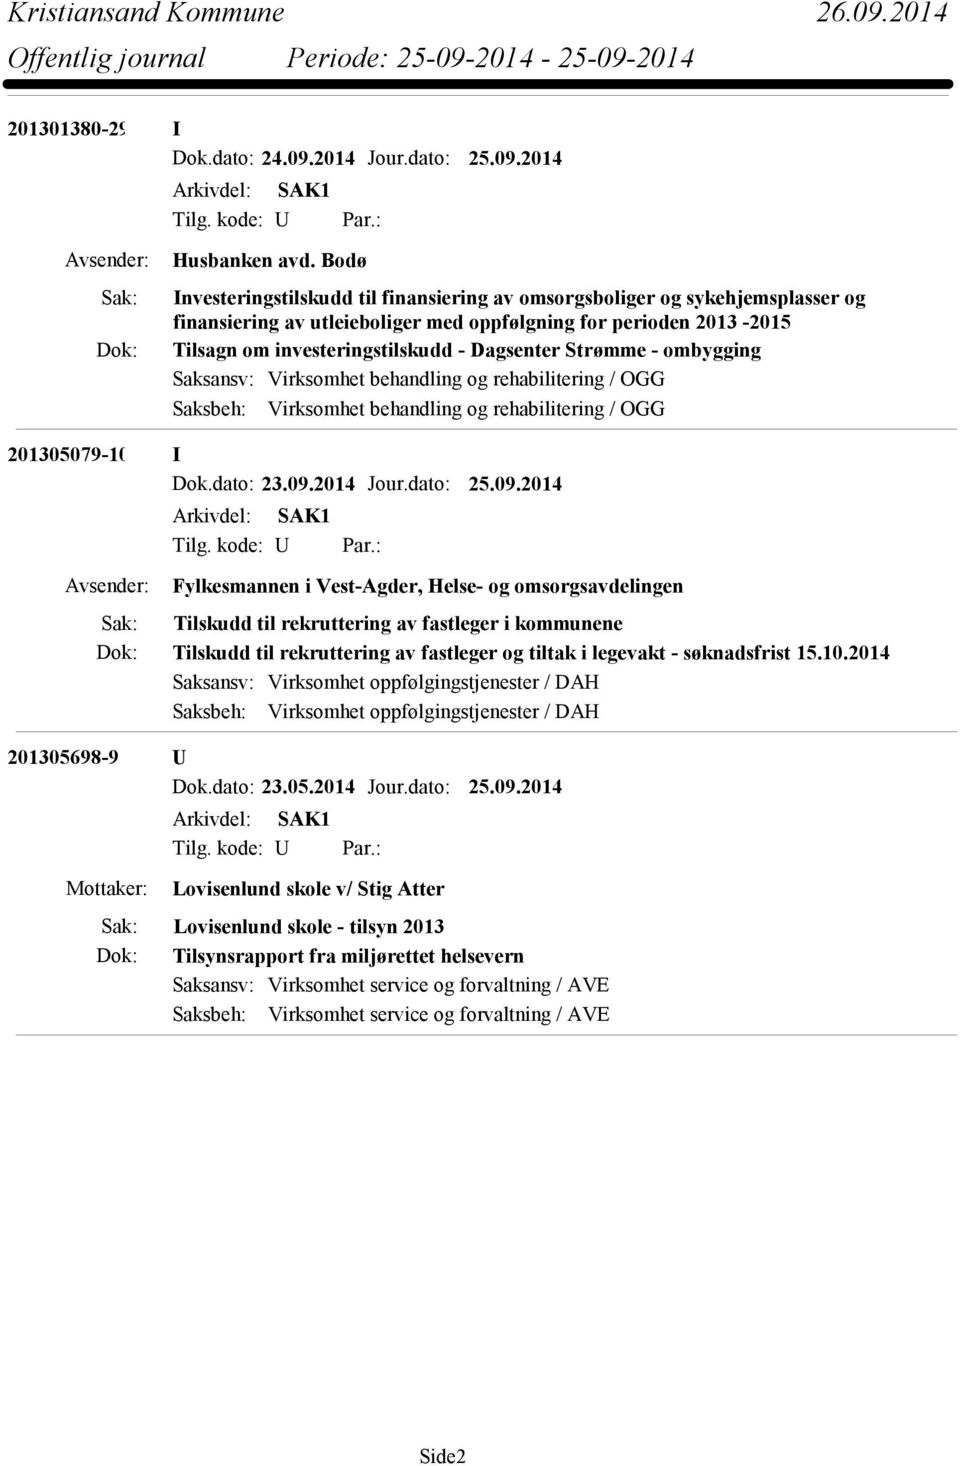 Strømme - ombygging Saksansv: Virksomhet behandling og rehabilitering / OGG Saksbeh: Virksomhet behandling og rehabilitering / OGG 201305079-10 I Fylkesmannen i Vest-Agder, Helse- og